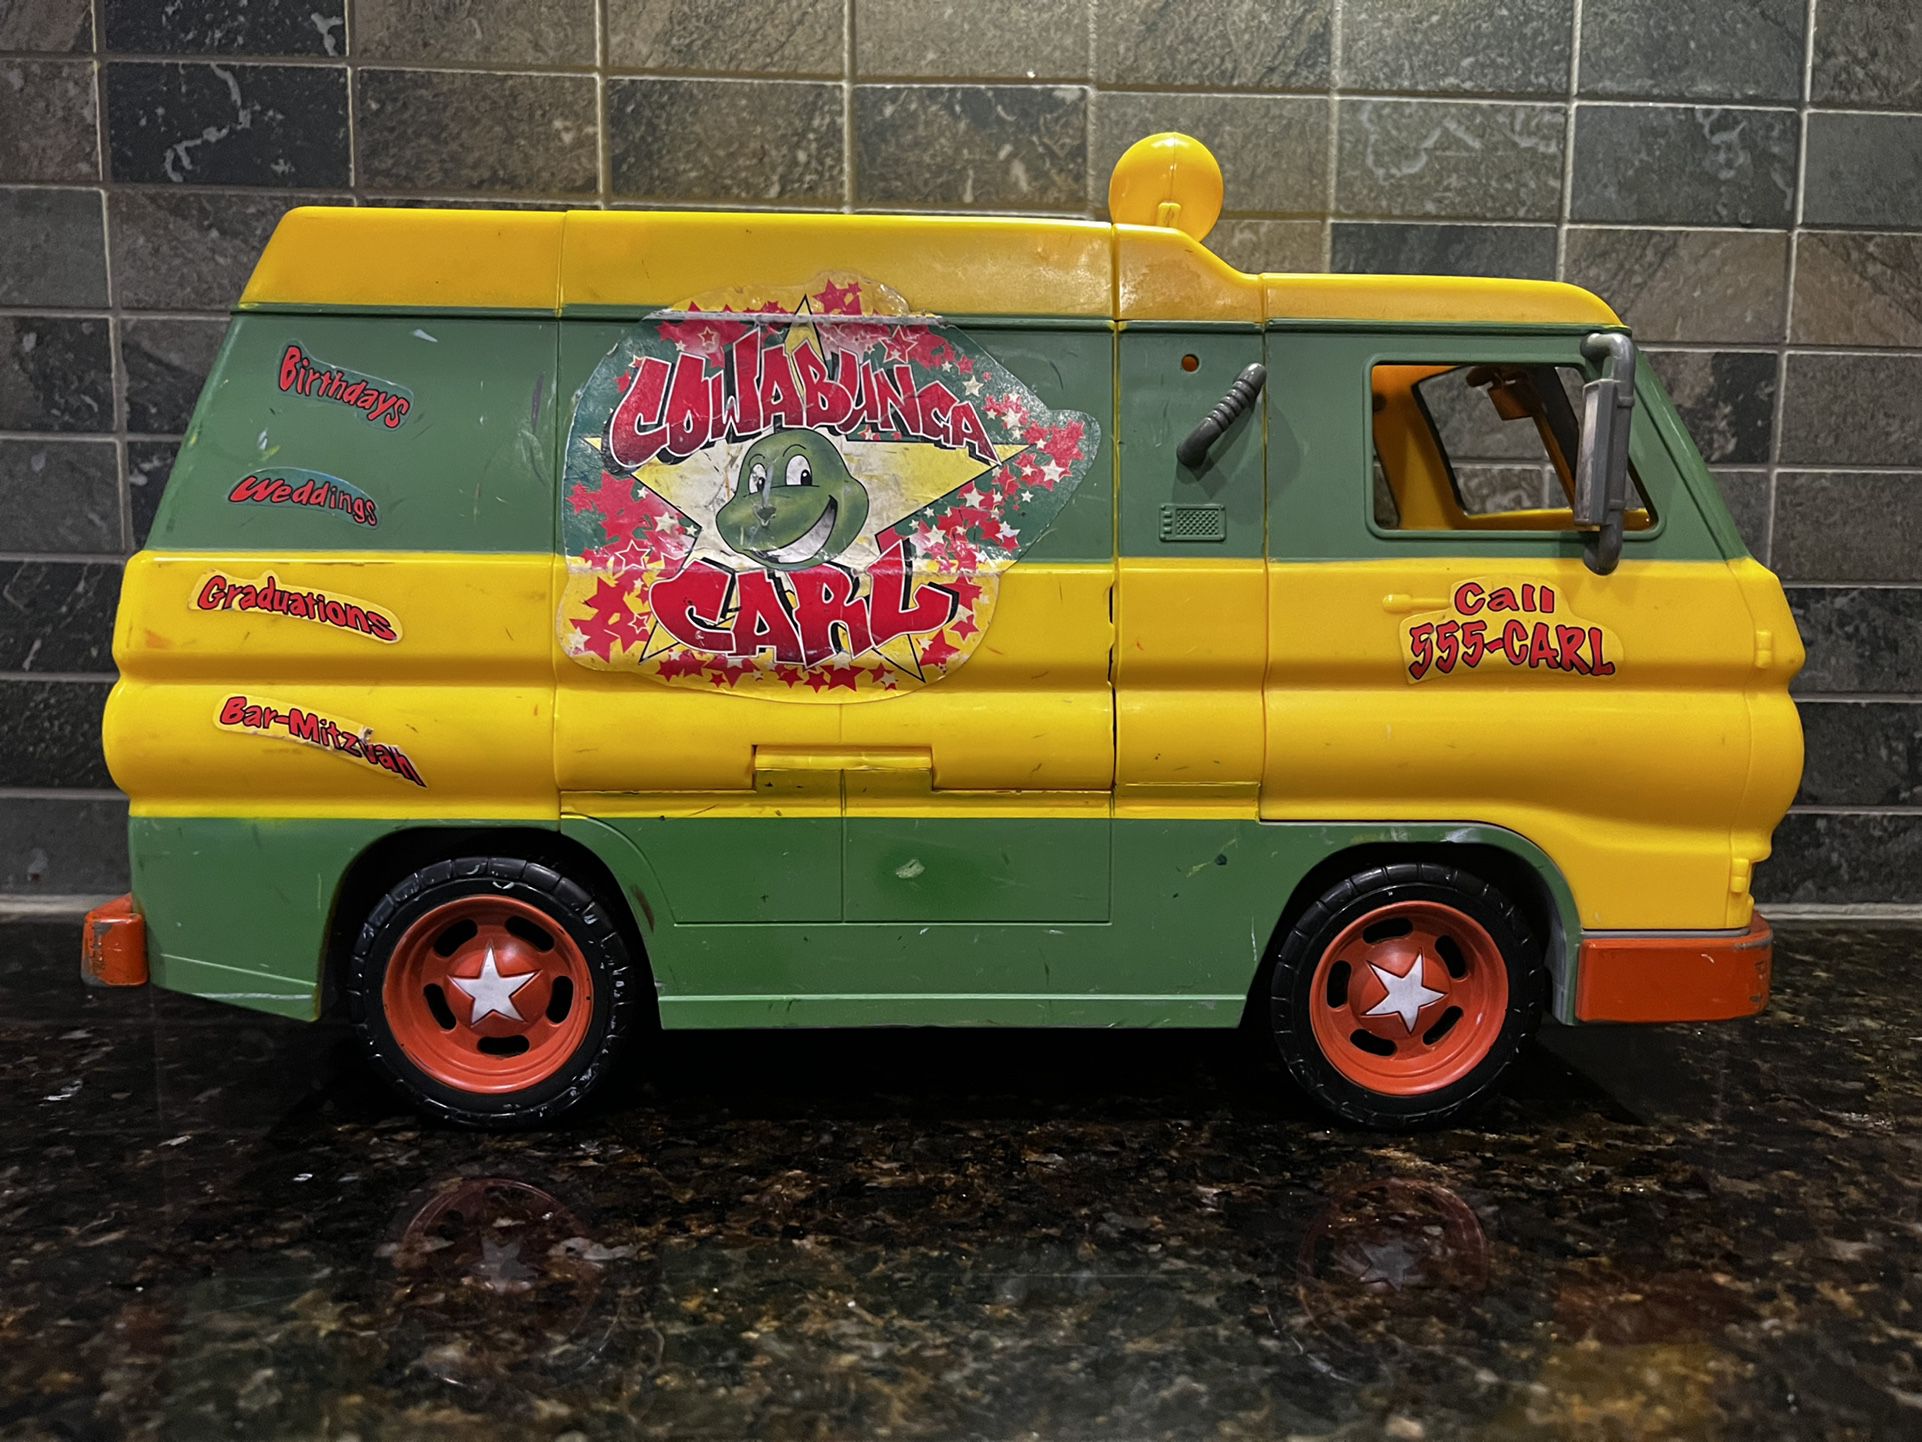 TMNT Cowabunga Carl Pizza Van - Ninja Turtles 2006 Playmates party wagon vehicle